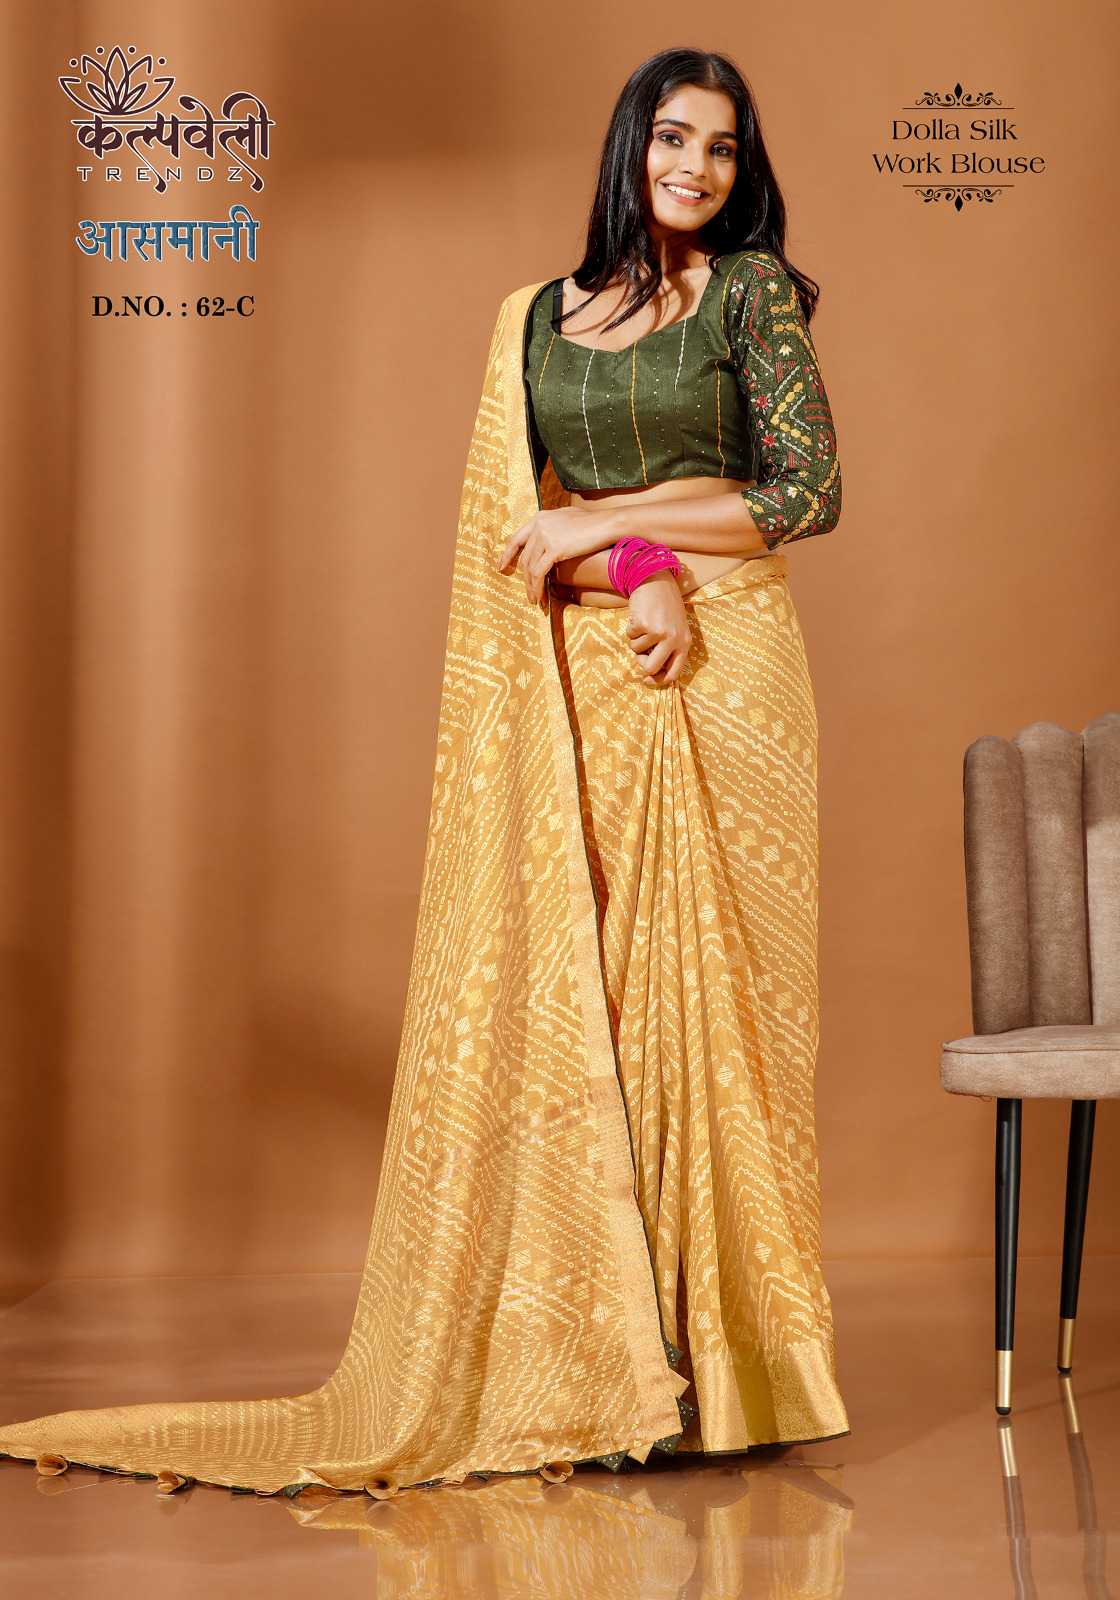 kalpavelly trendz ashmani 62 beautiful dola silk saree with work blouse